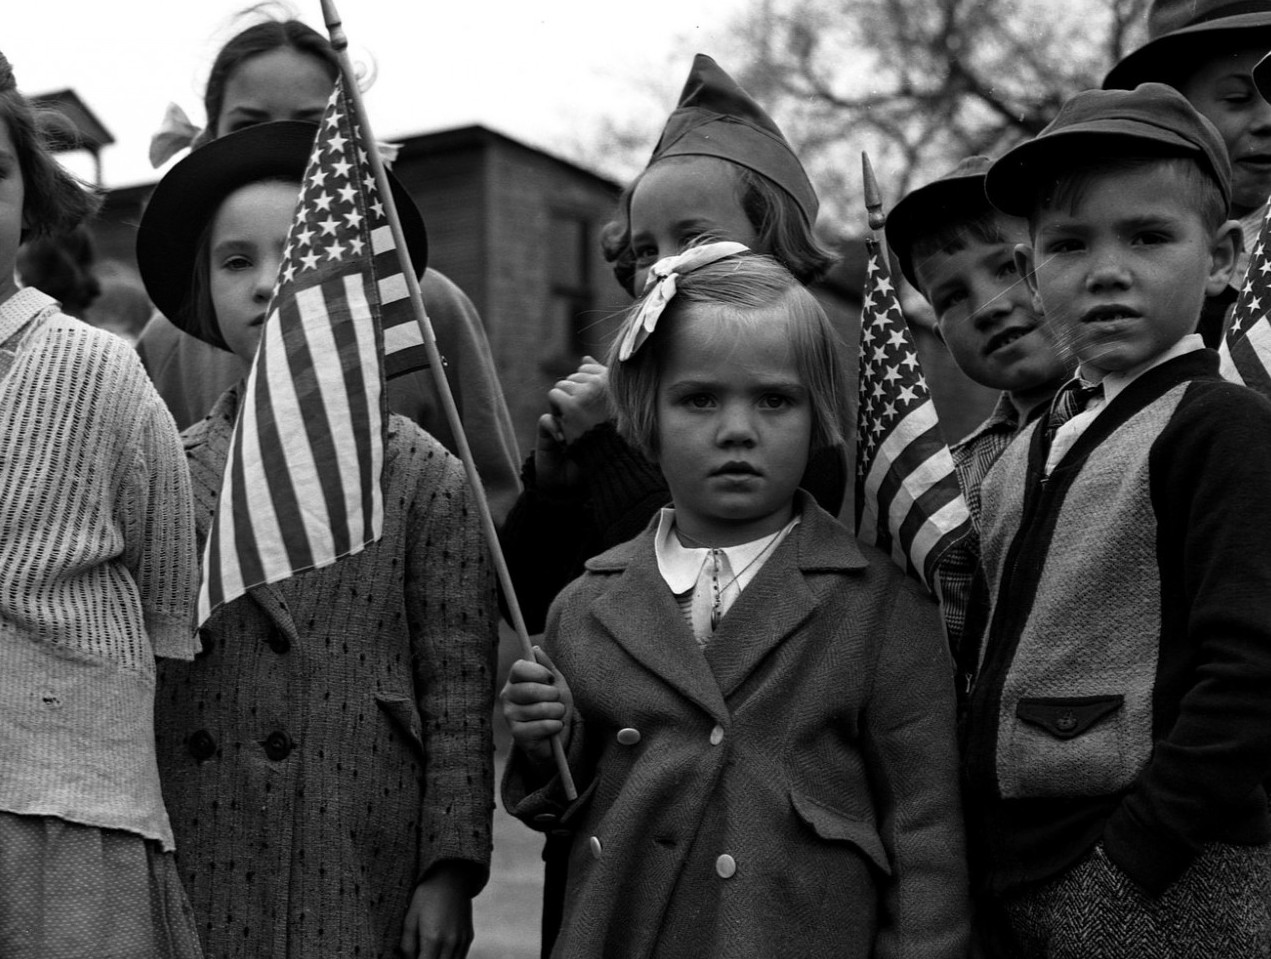 Children on Memorial Day, 1943. Source: Flickr, Public Domain